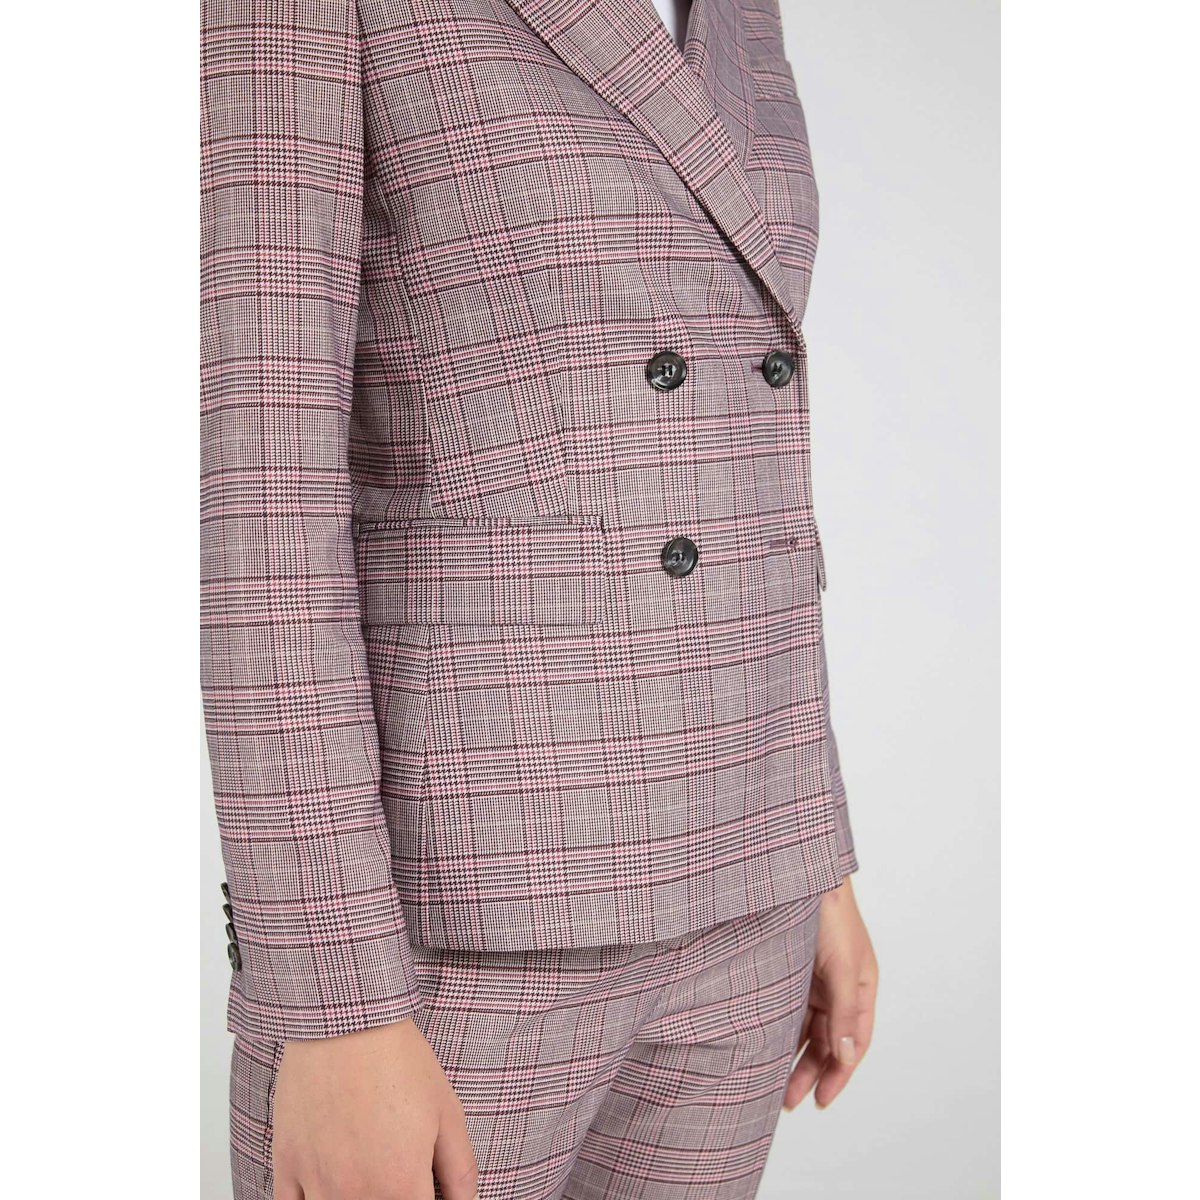 InStitchu Collection The Thomas Pink Glen Plaid Jacket